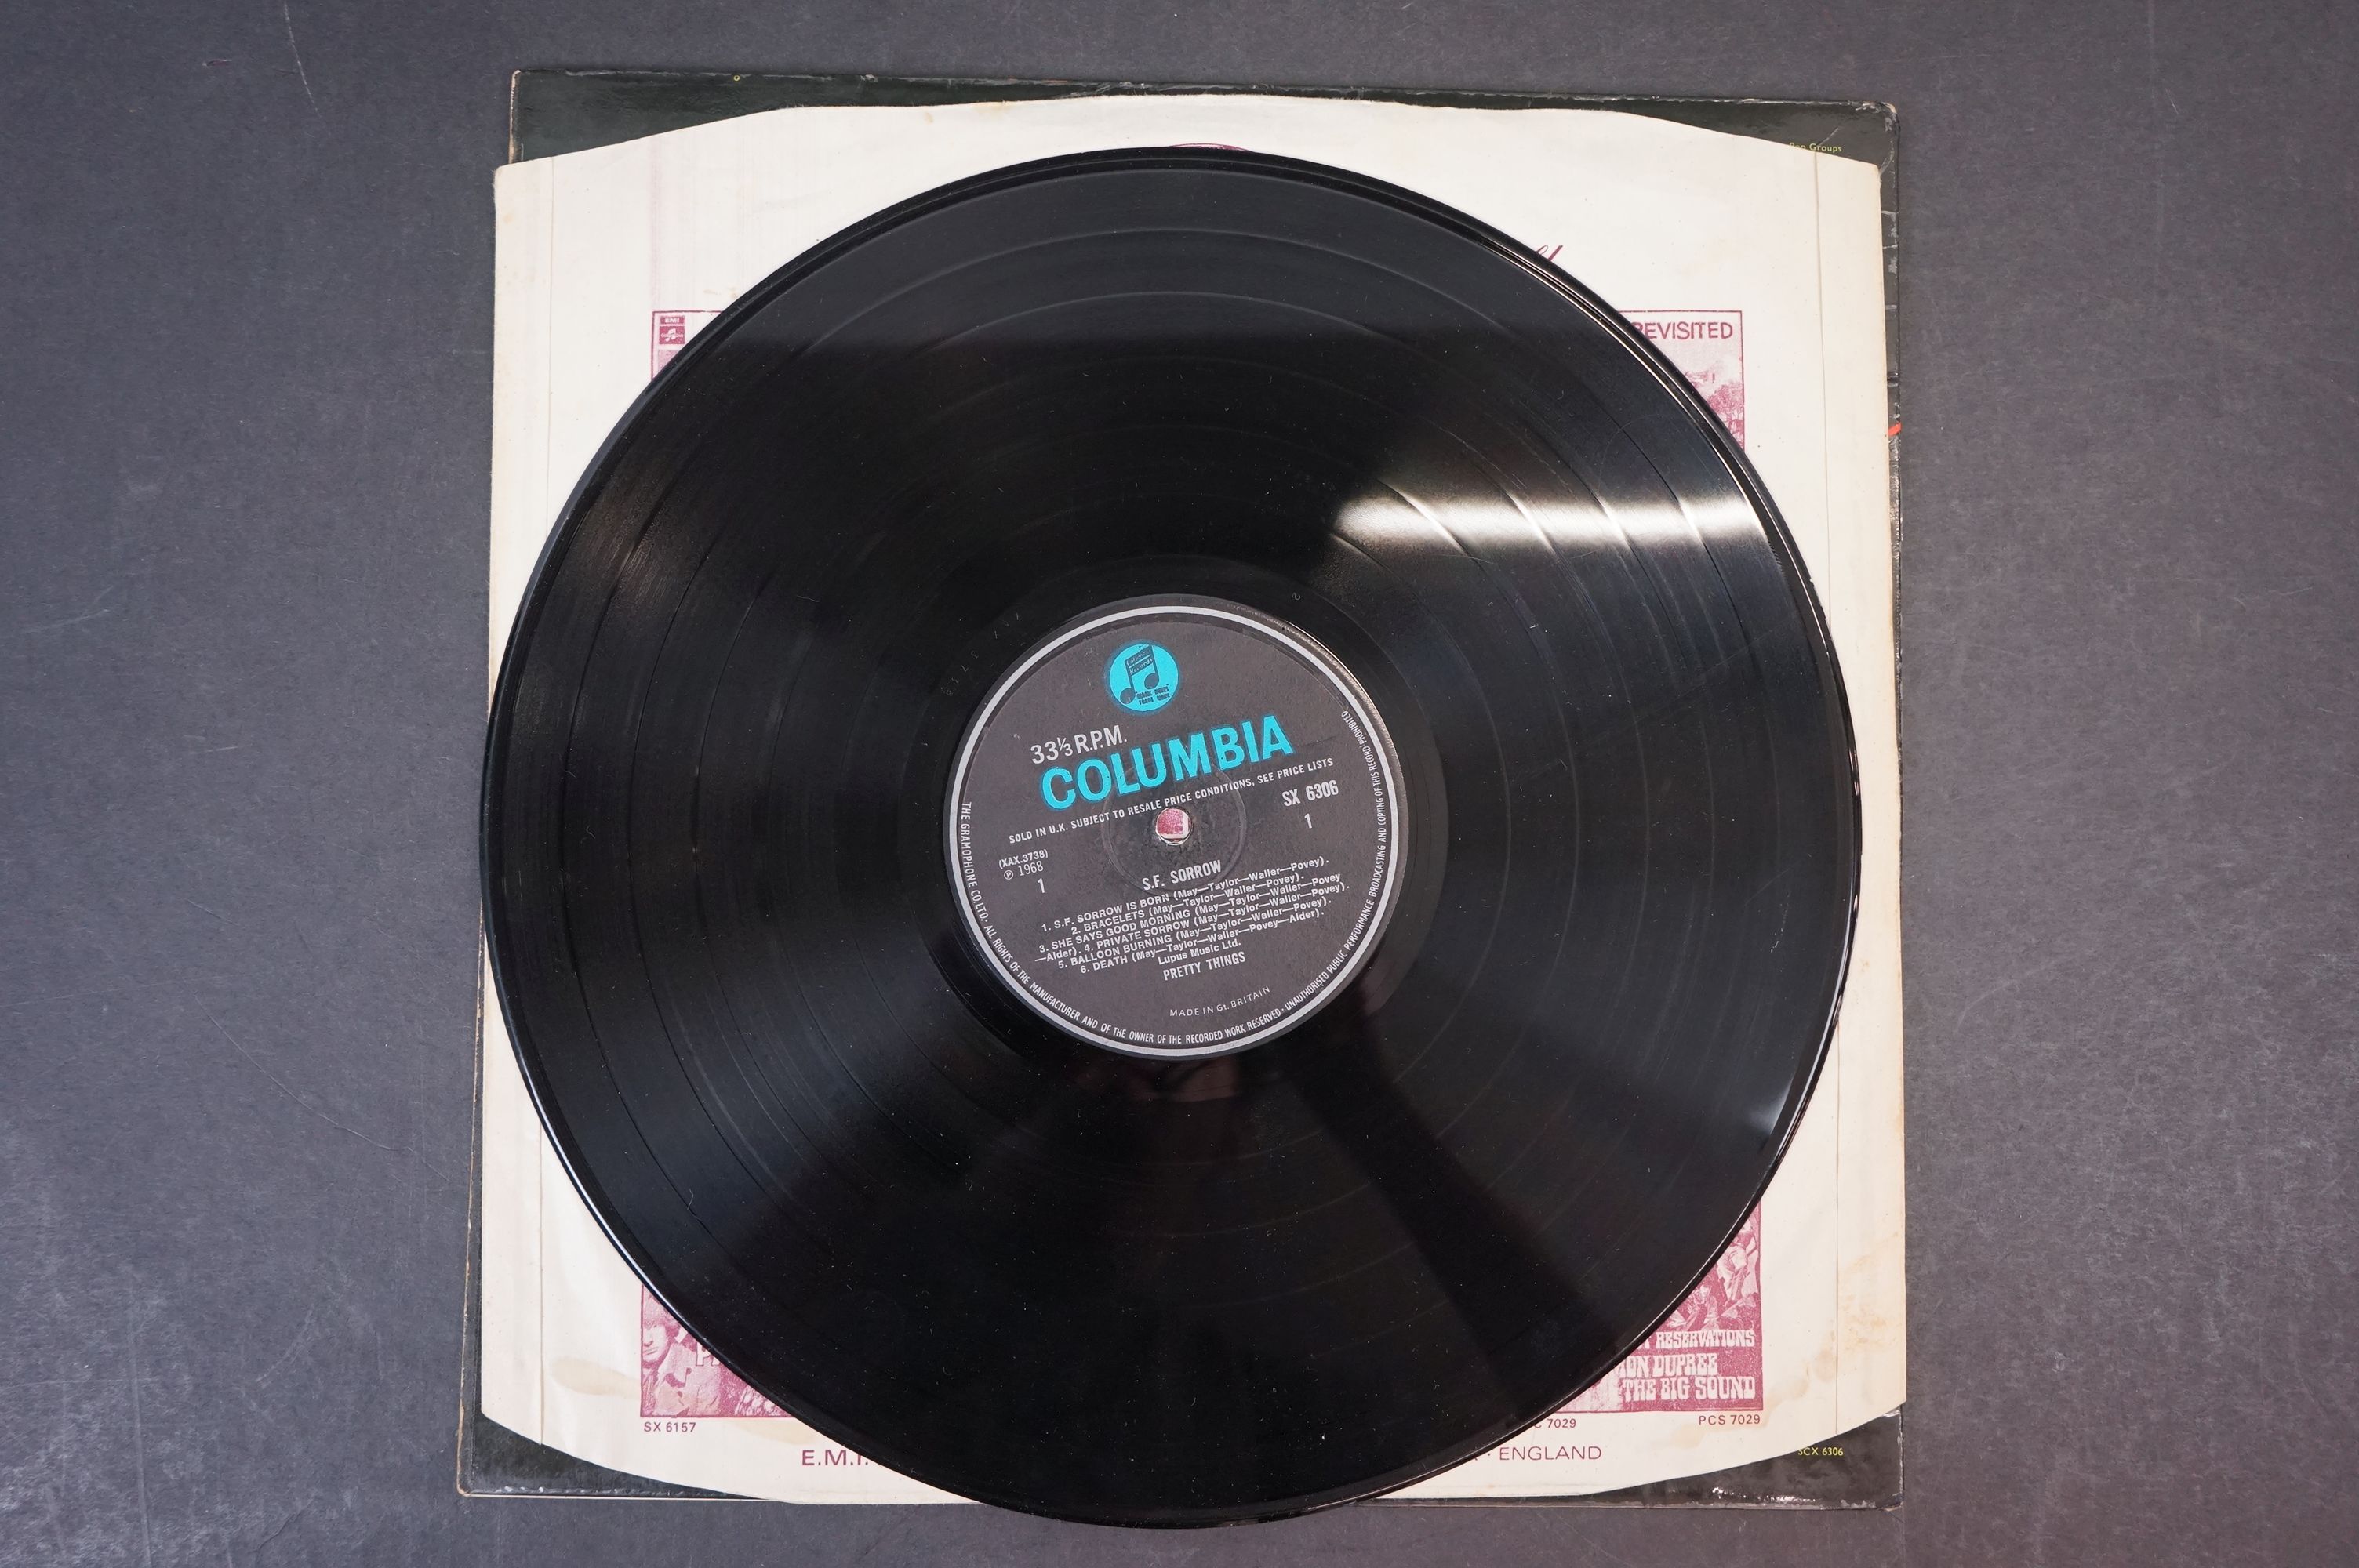 Vinyl - Pretty Things - S. F. Sorrow. Original Uk 1st Pressing mono copy SX 6306 gatefold sleeve - Image 3 of 5